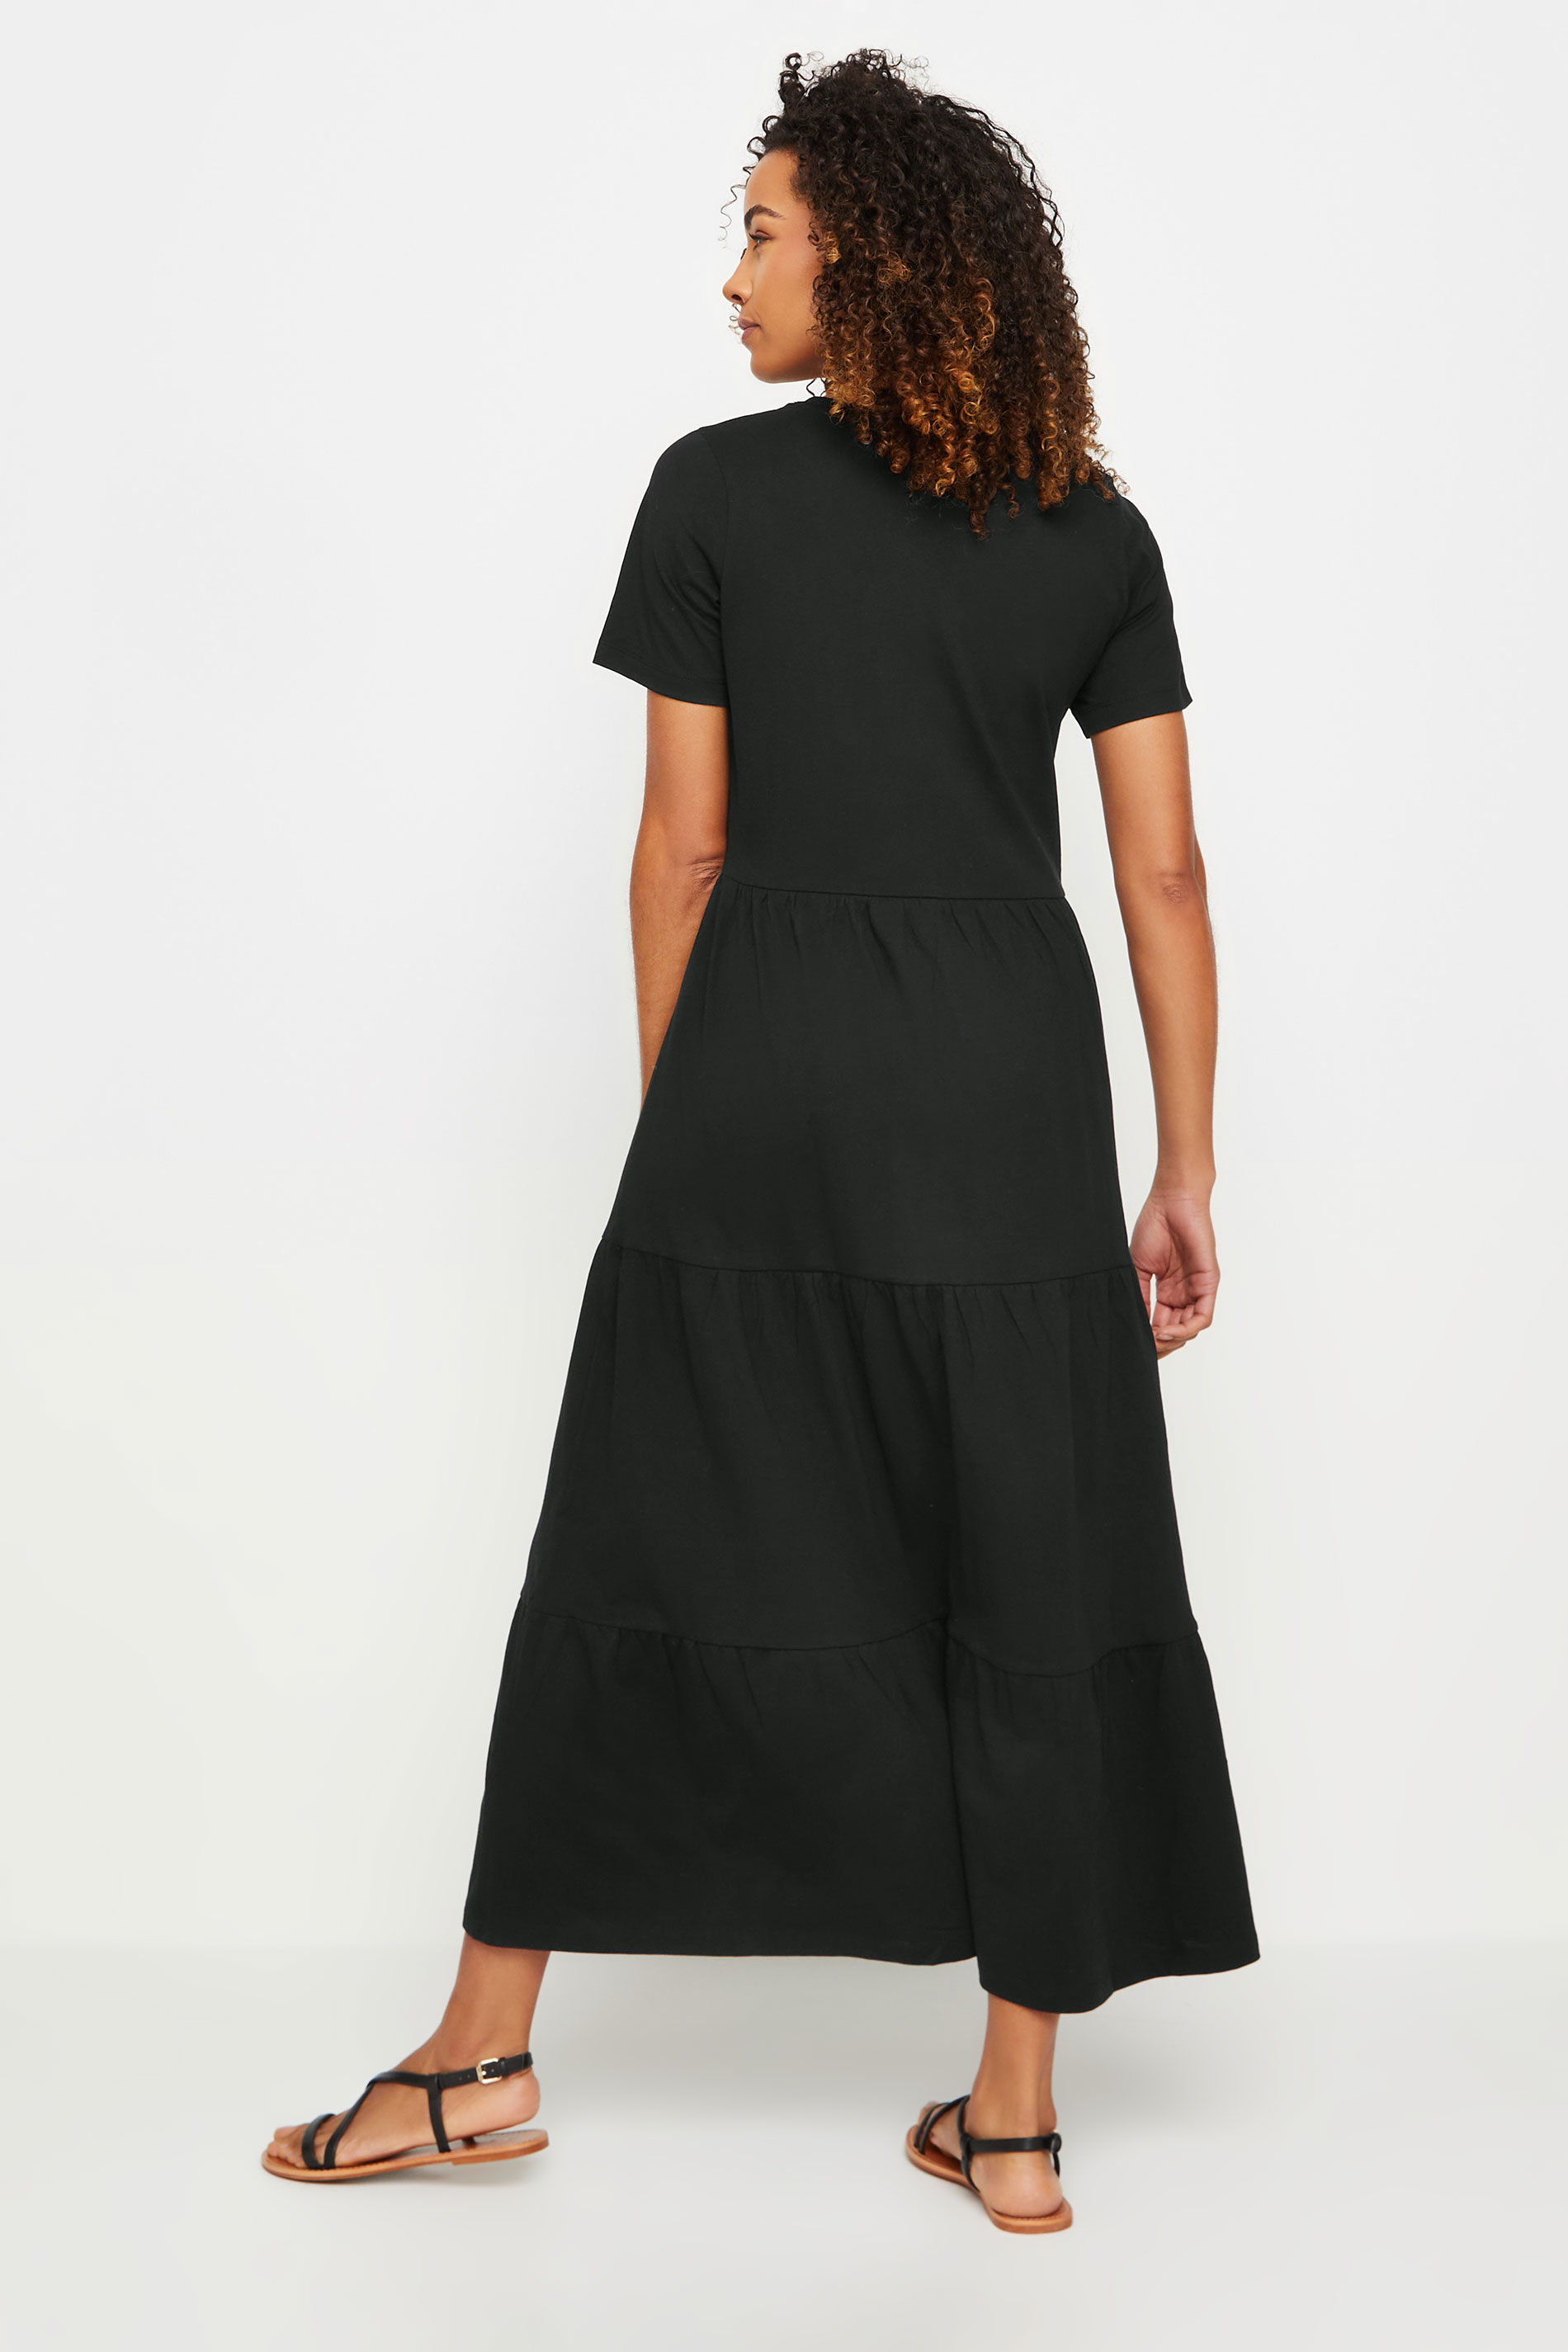 M&Co Black Short Sleeve Tiered Cotton Maxi Dress | M&Co 3